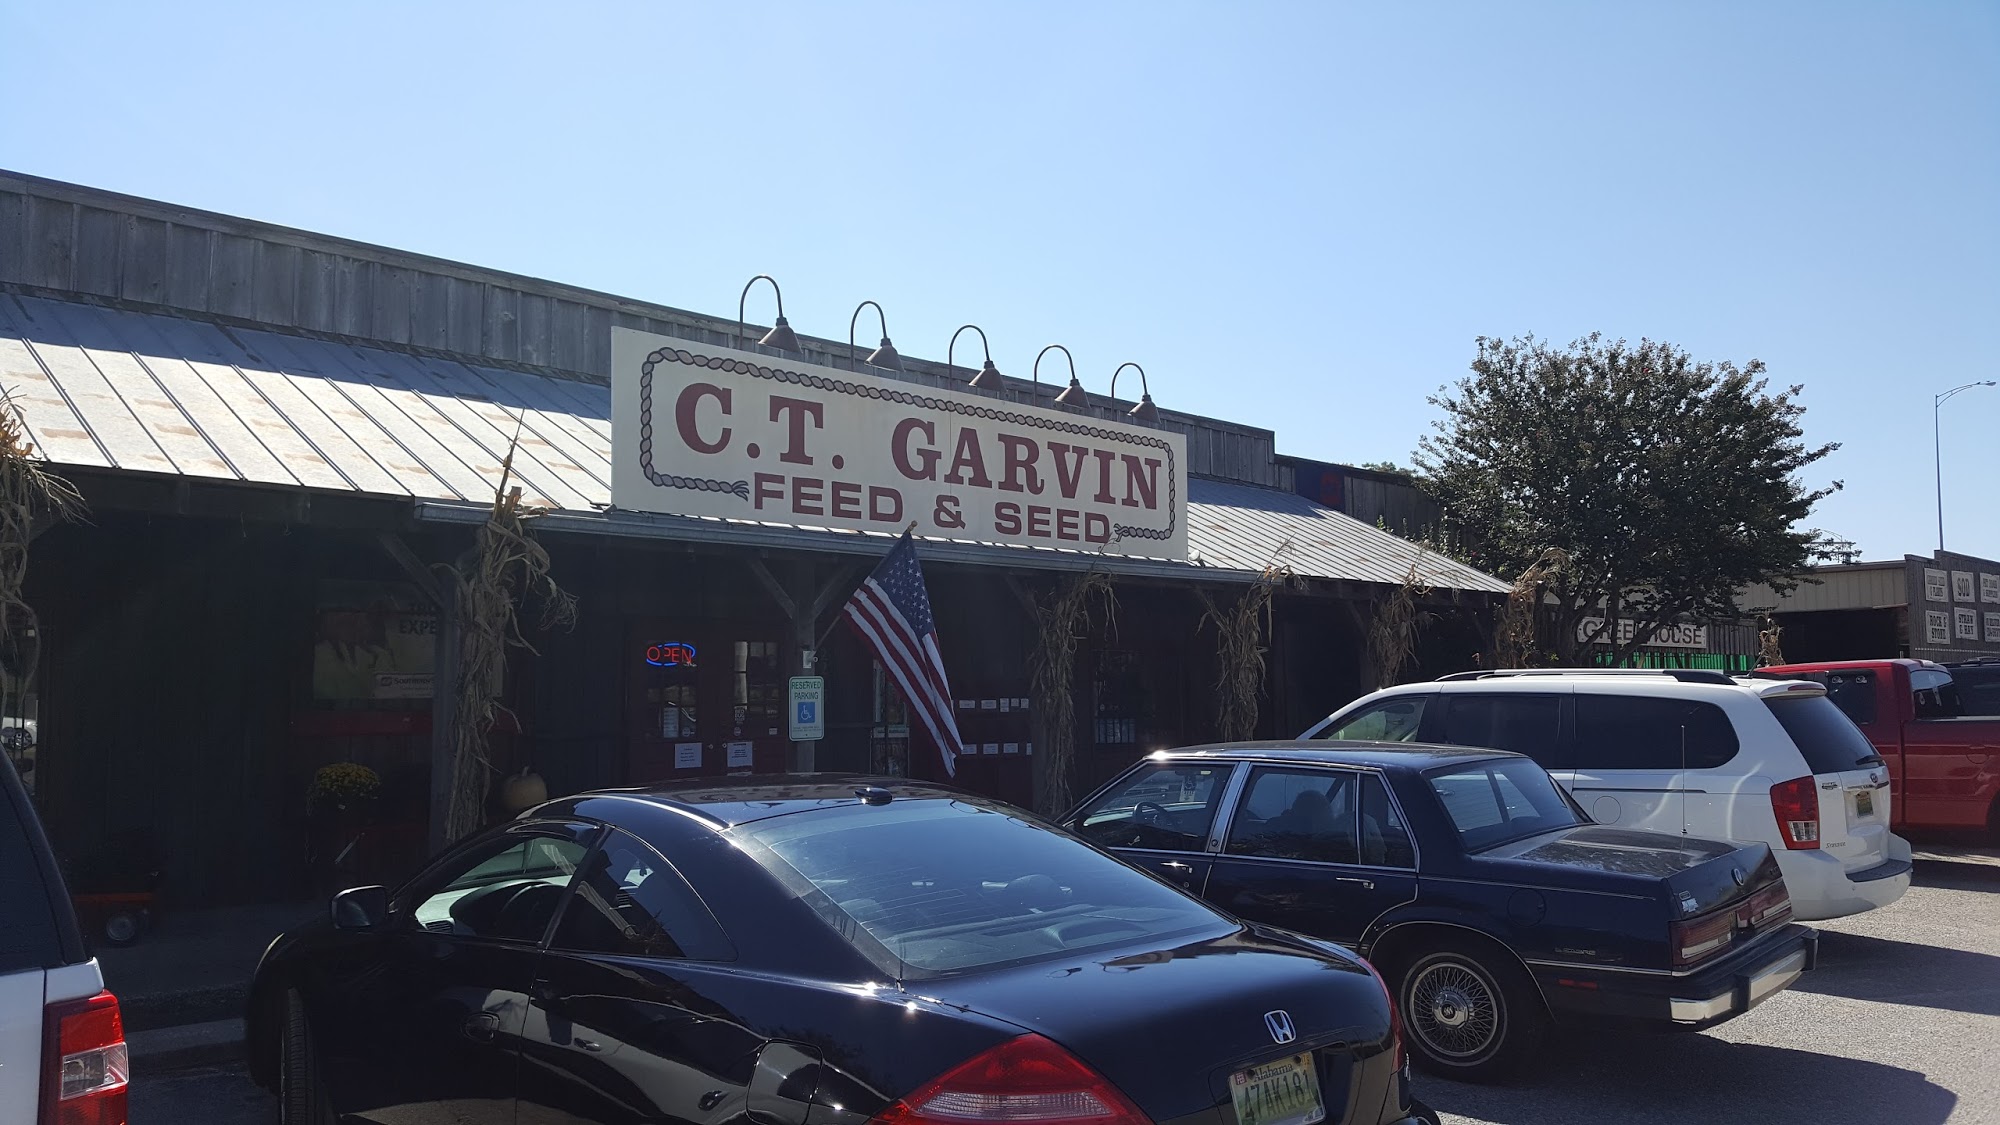 C.T. Garvins Feed & Seed, LLC